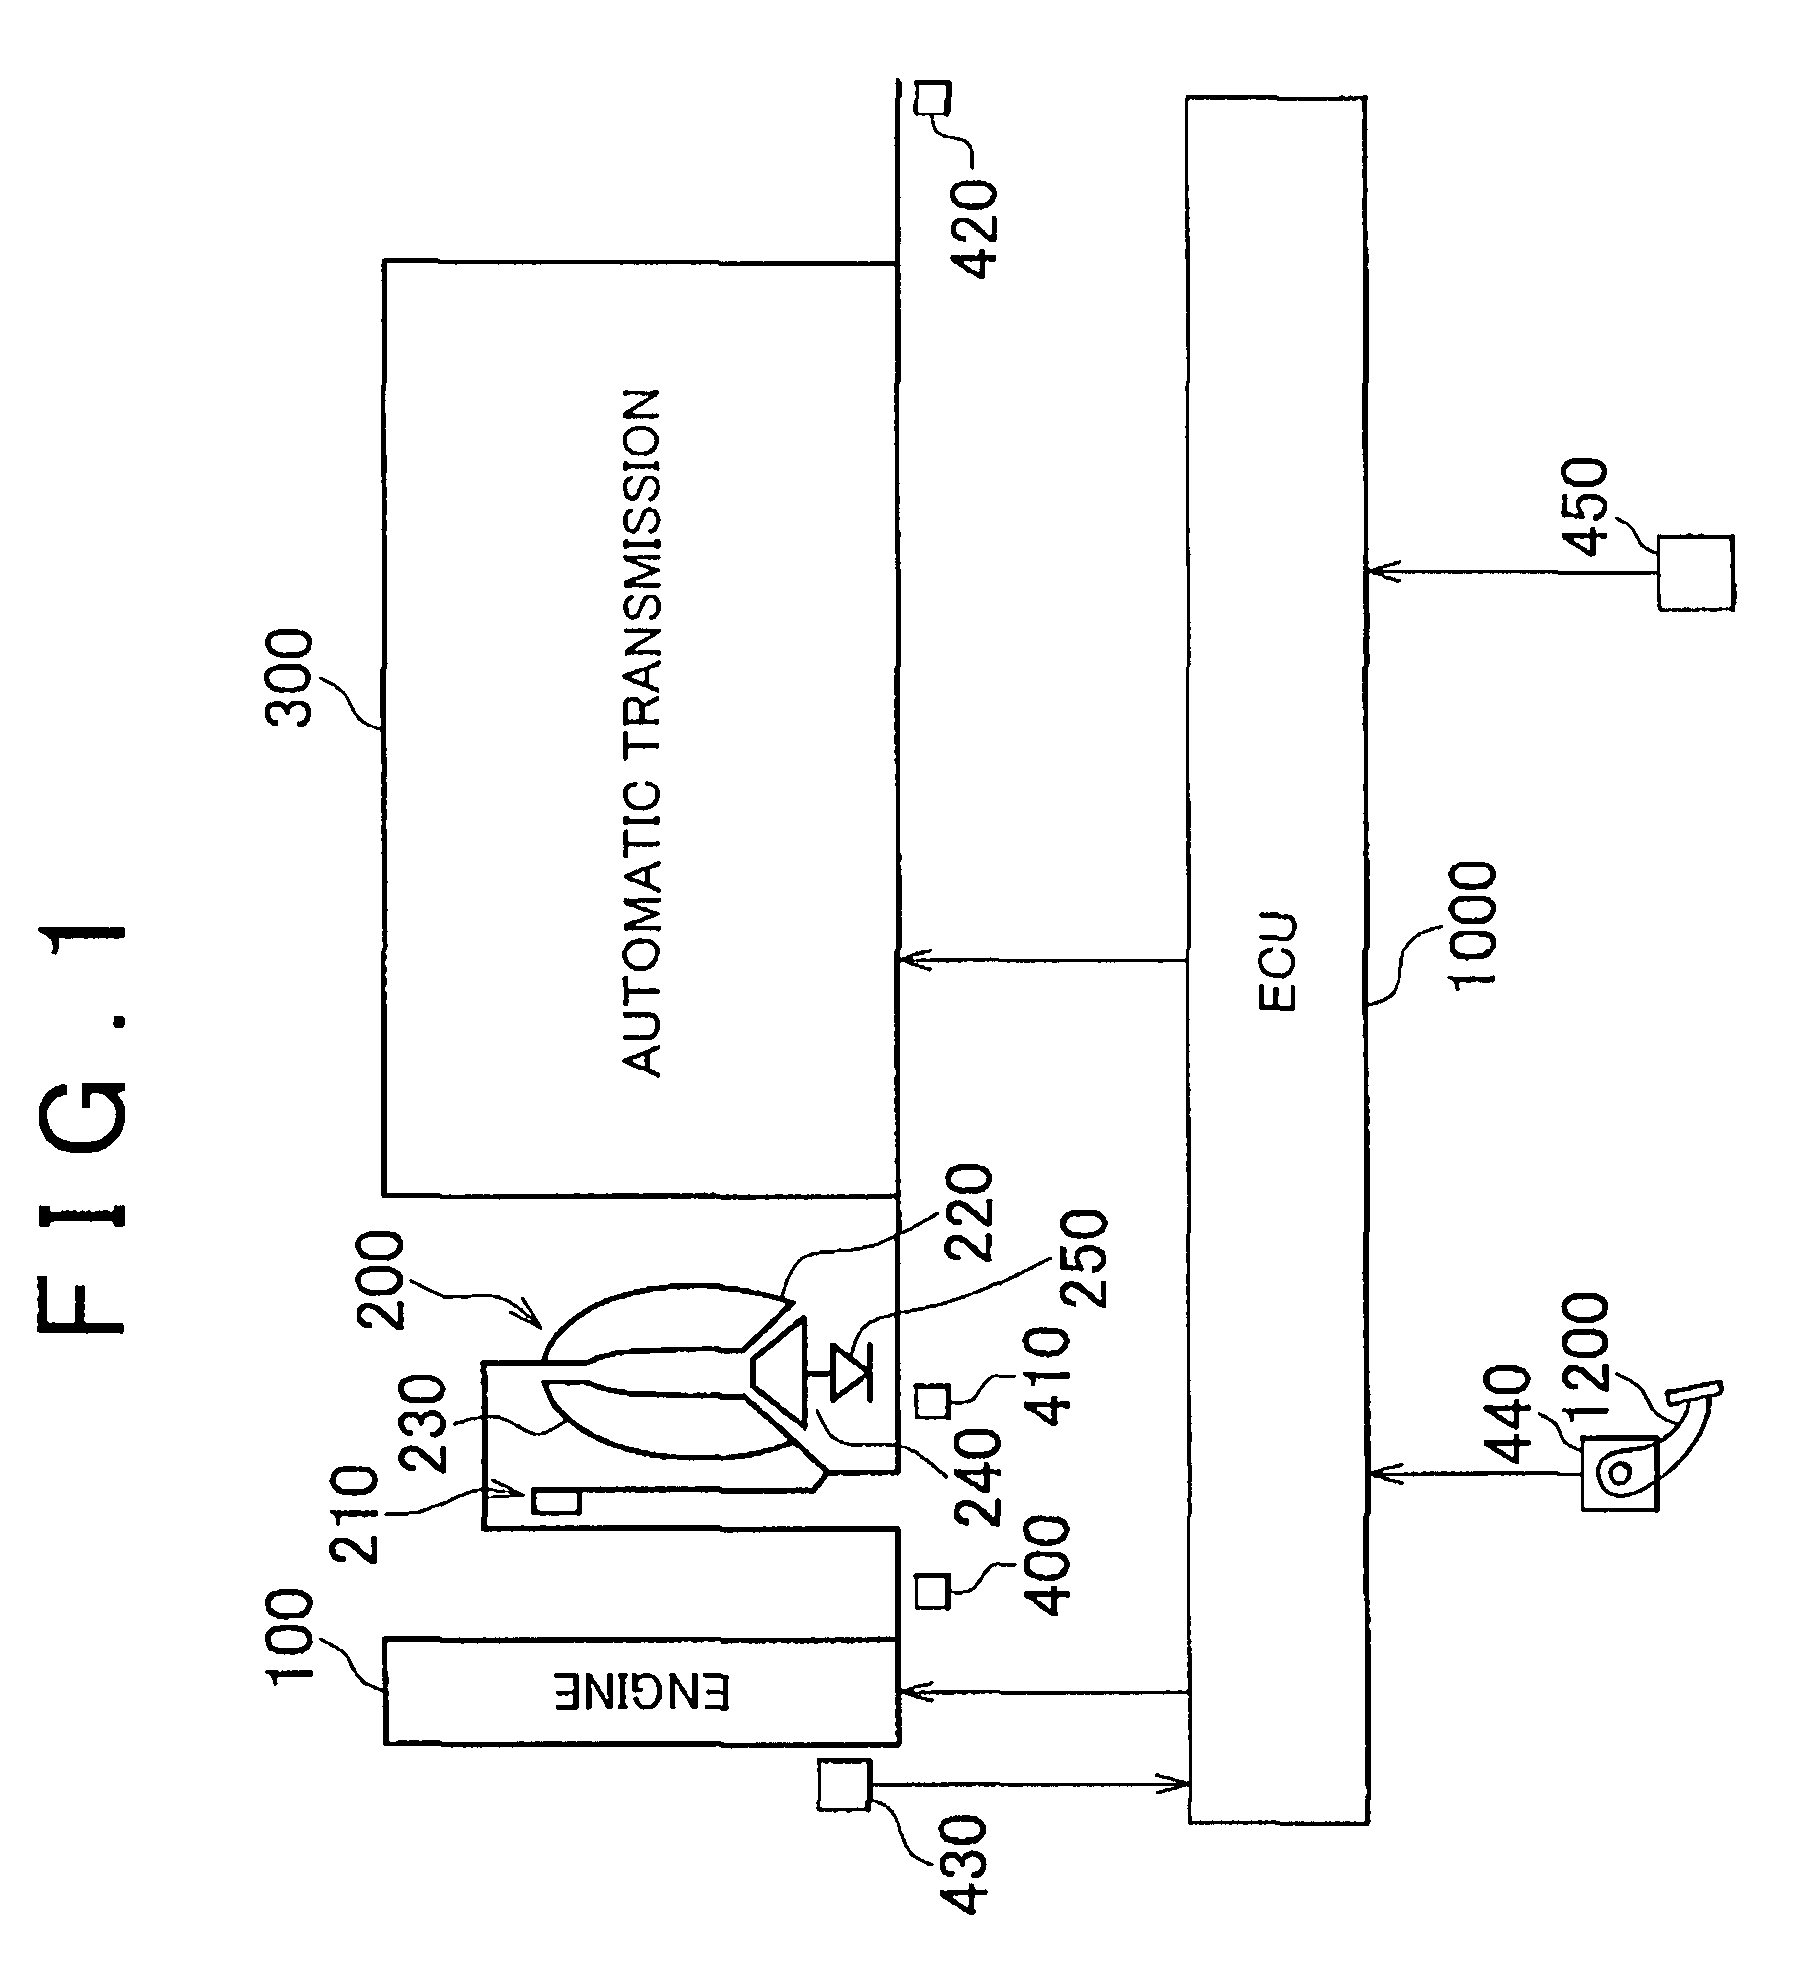 Powertrain control apparatus and method